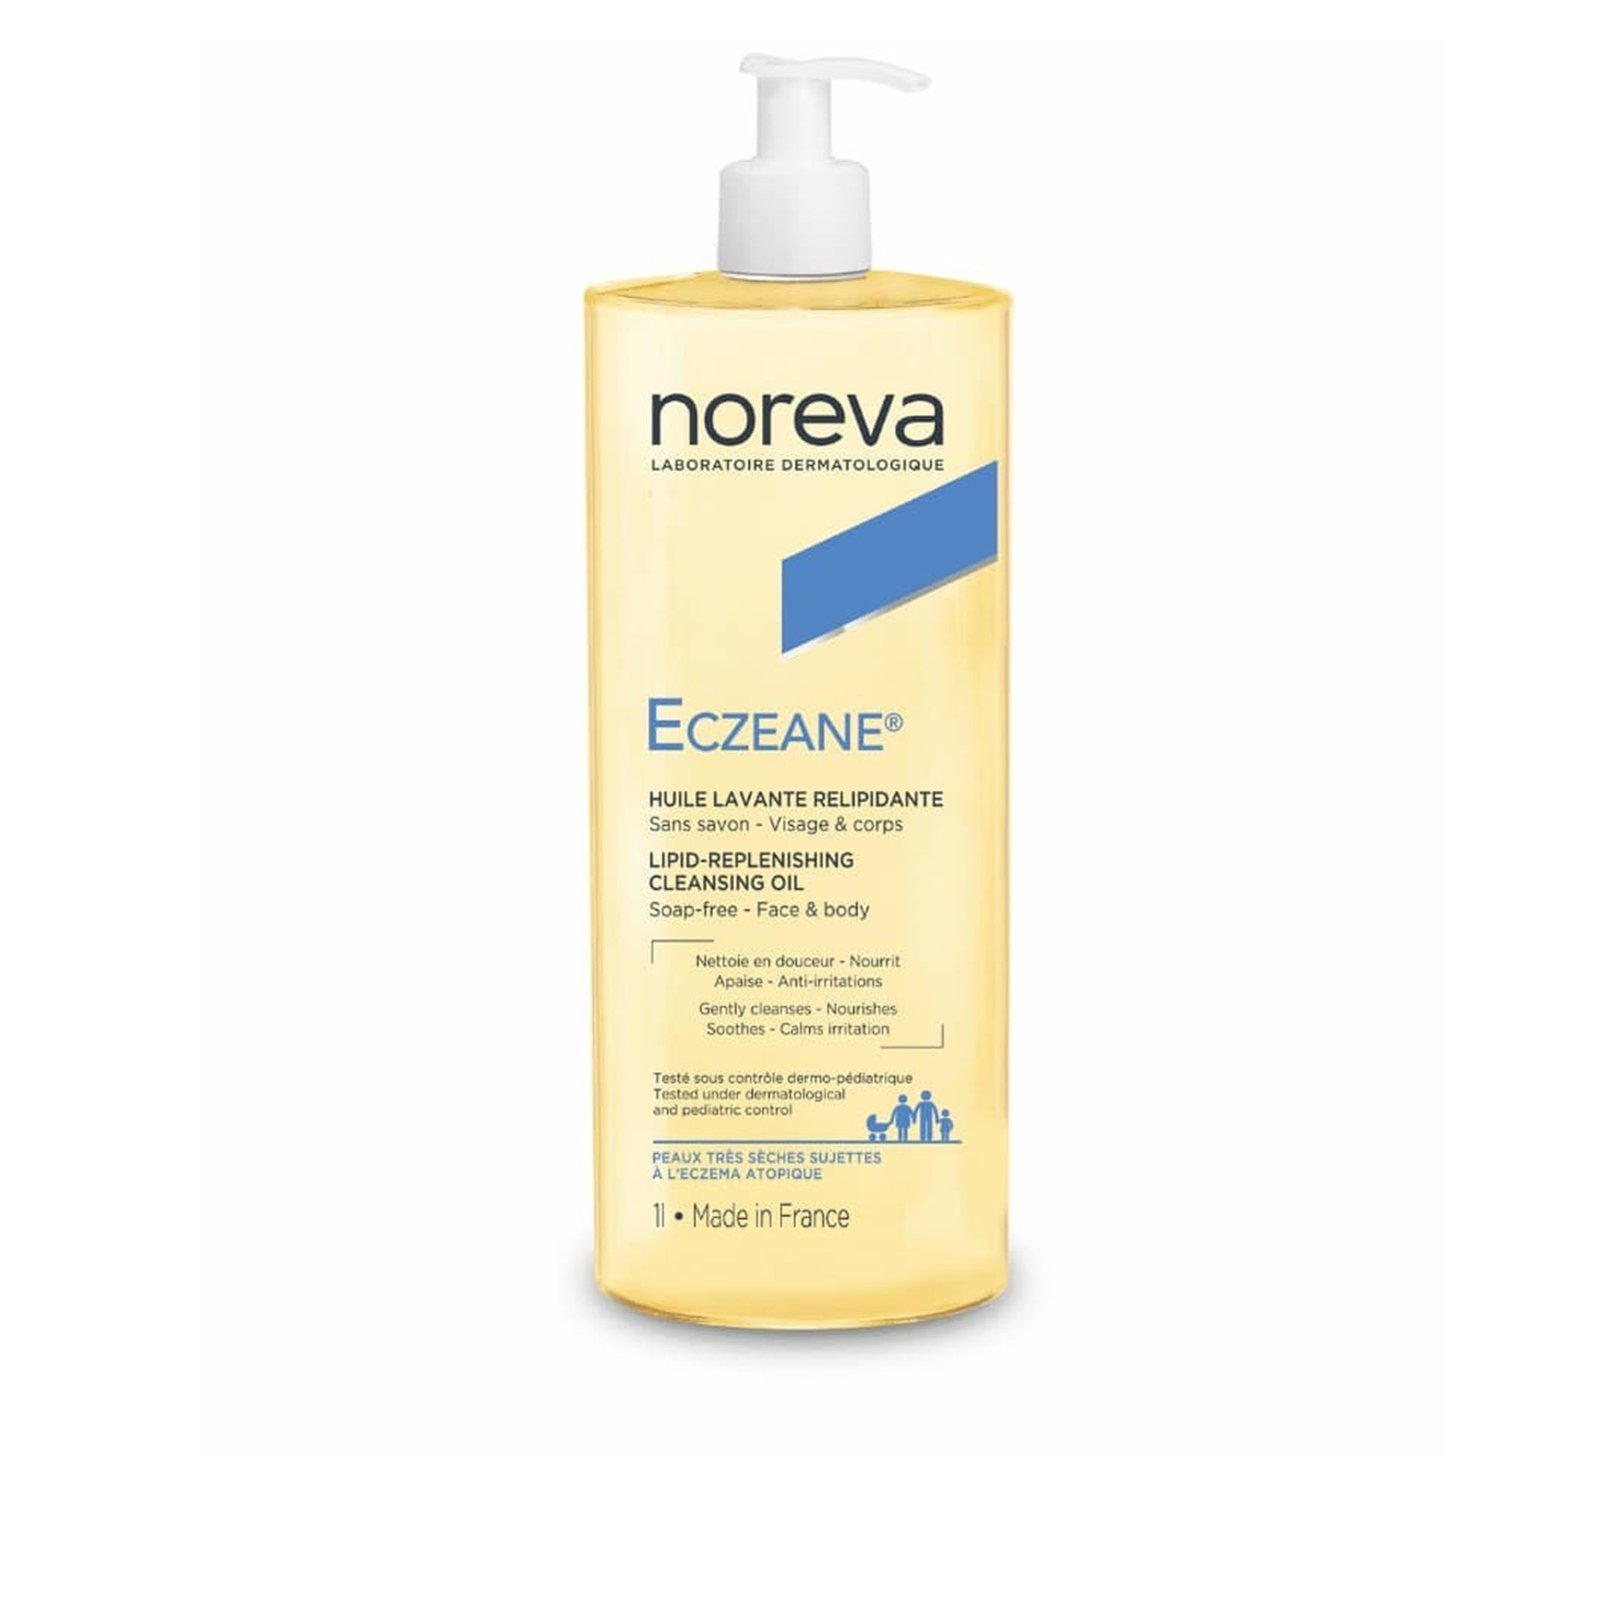 Noreva Eczeane Lipid-Replenishing Cleansing Oil 1L (33.8 fl oz)